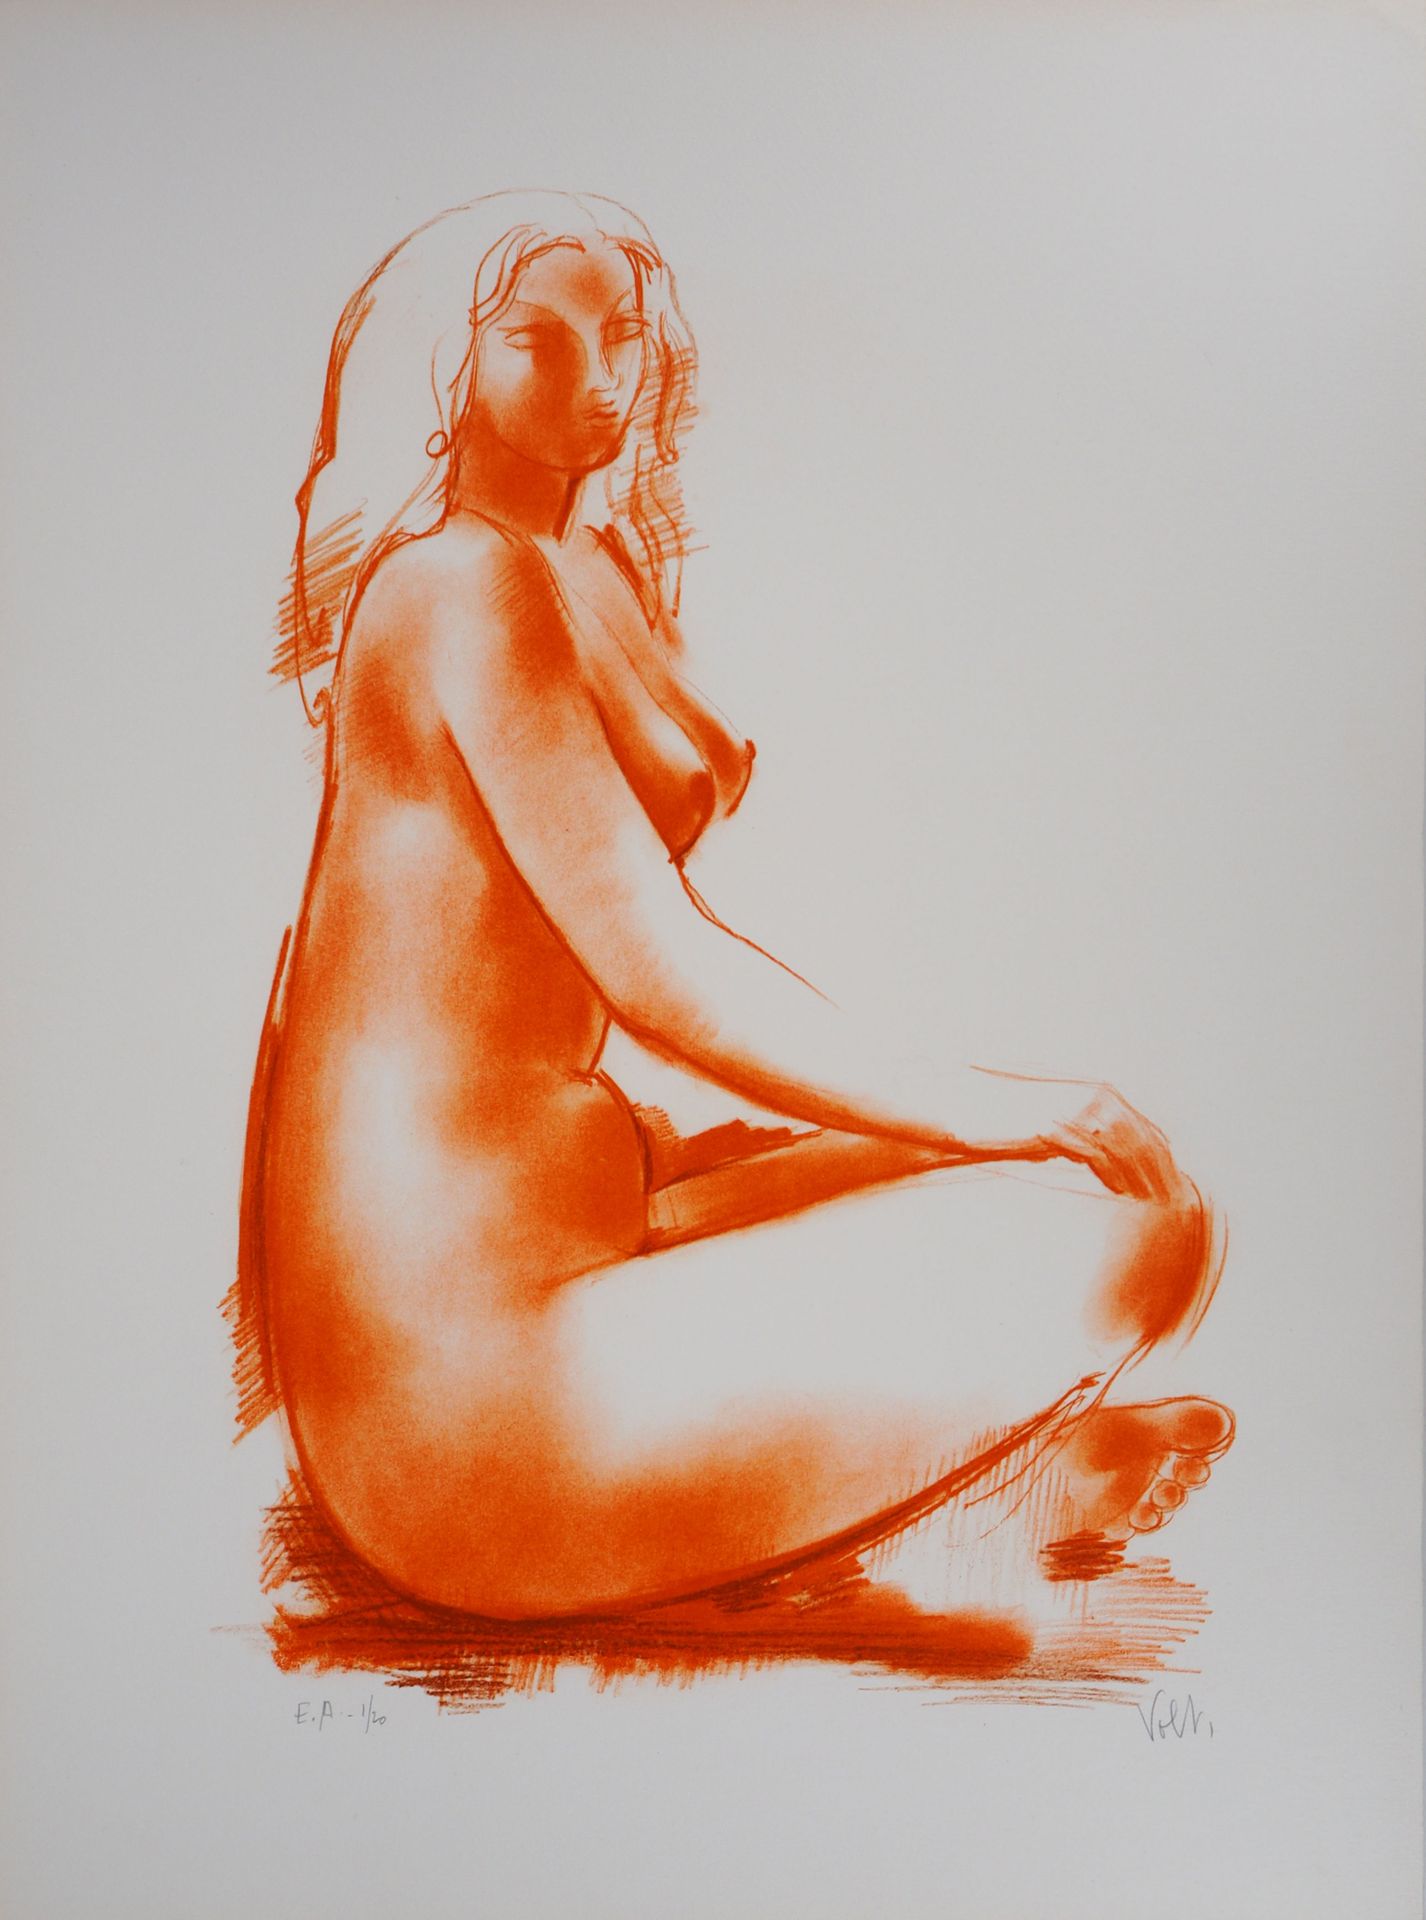 Antoniucci VOLTI 安东尼奥奇-沃尔蒂(1915-1989)

坐着的裸体轮廓

原始石版画

用铅笔签名

在/20上编号，并以 "EA"（艺术&hellip;